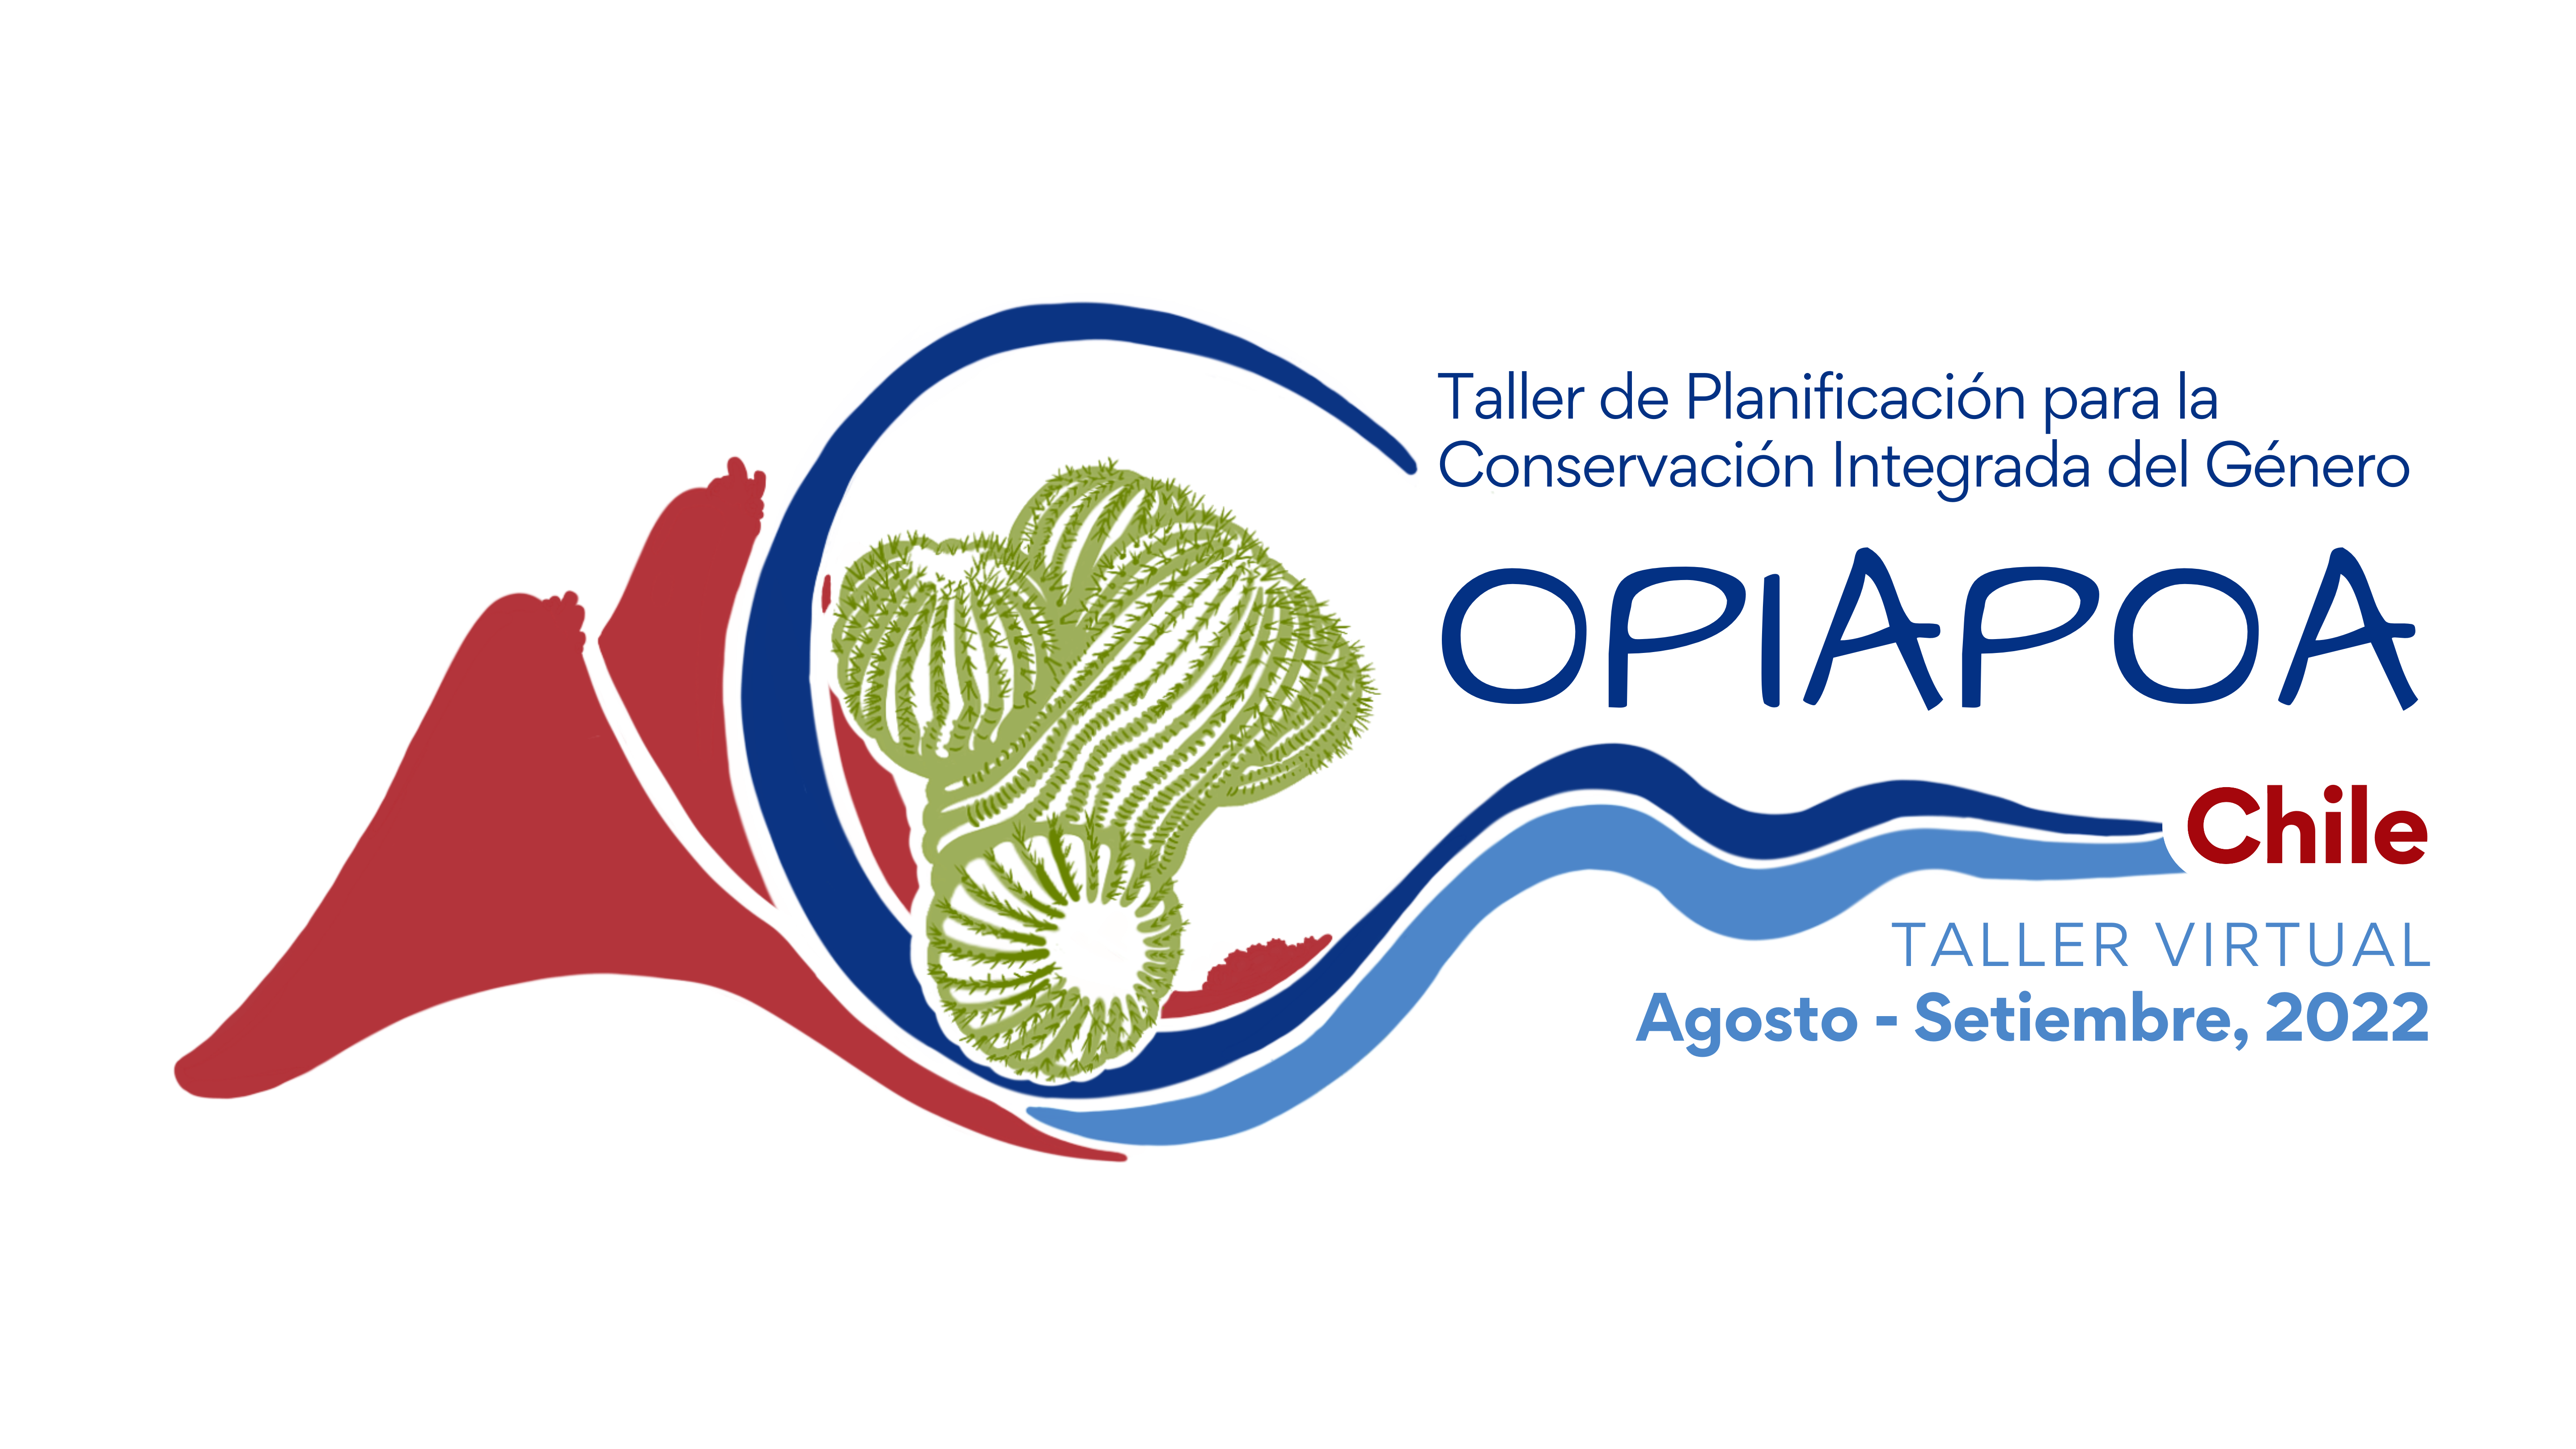 Taller de planificación integral para la conservación de Copiapoa